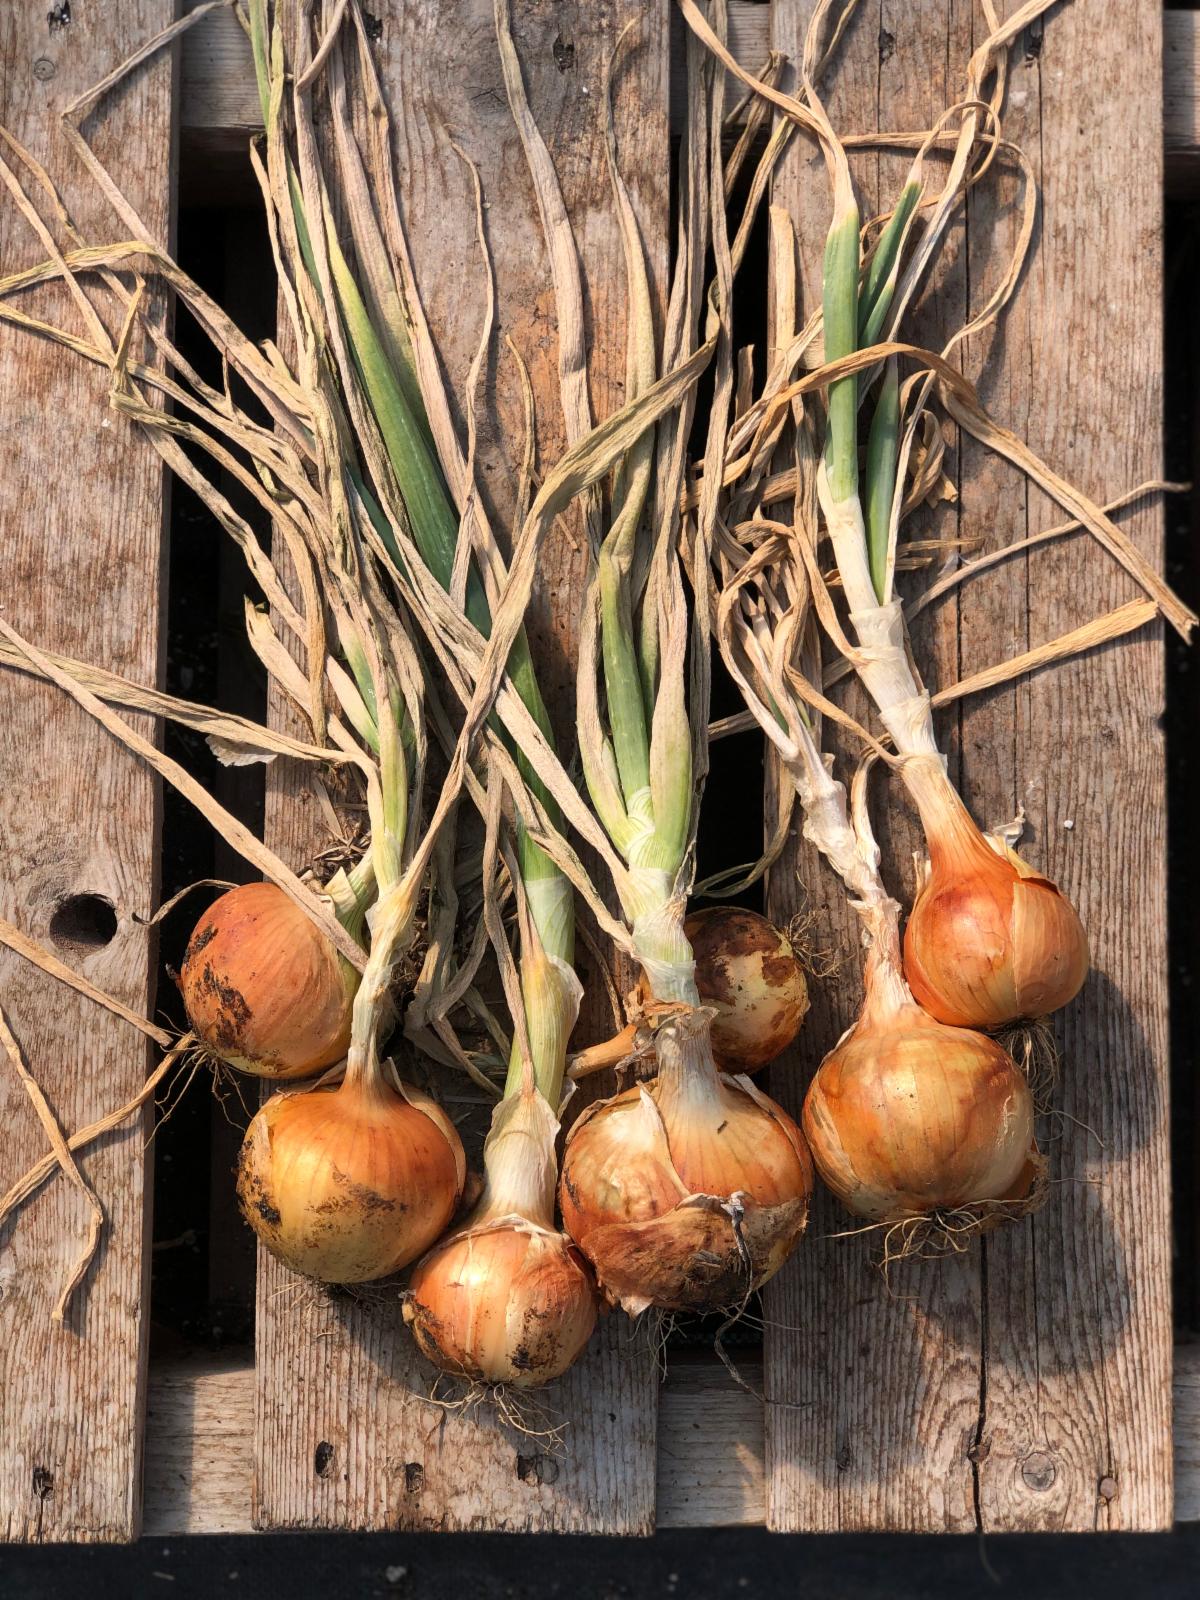 Cortland onions